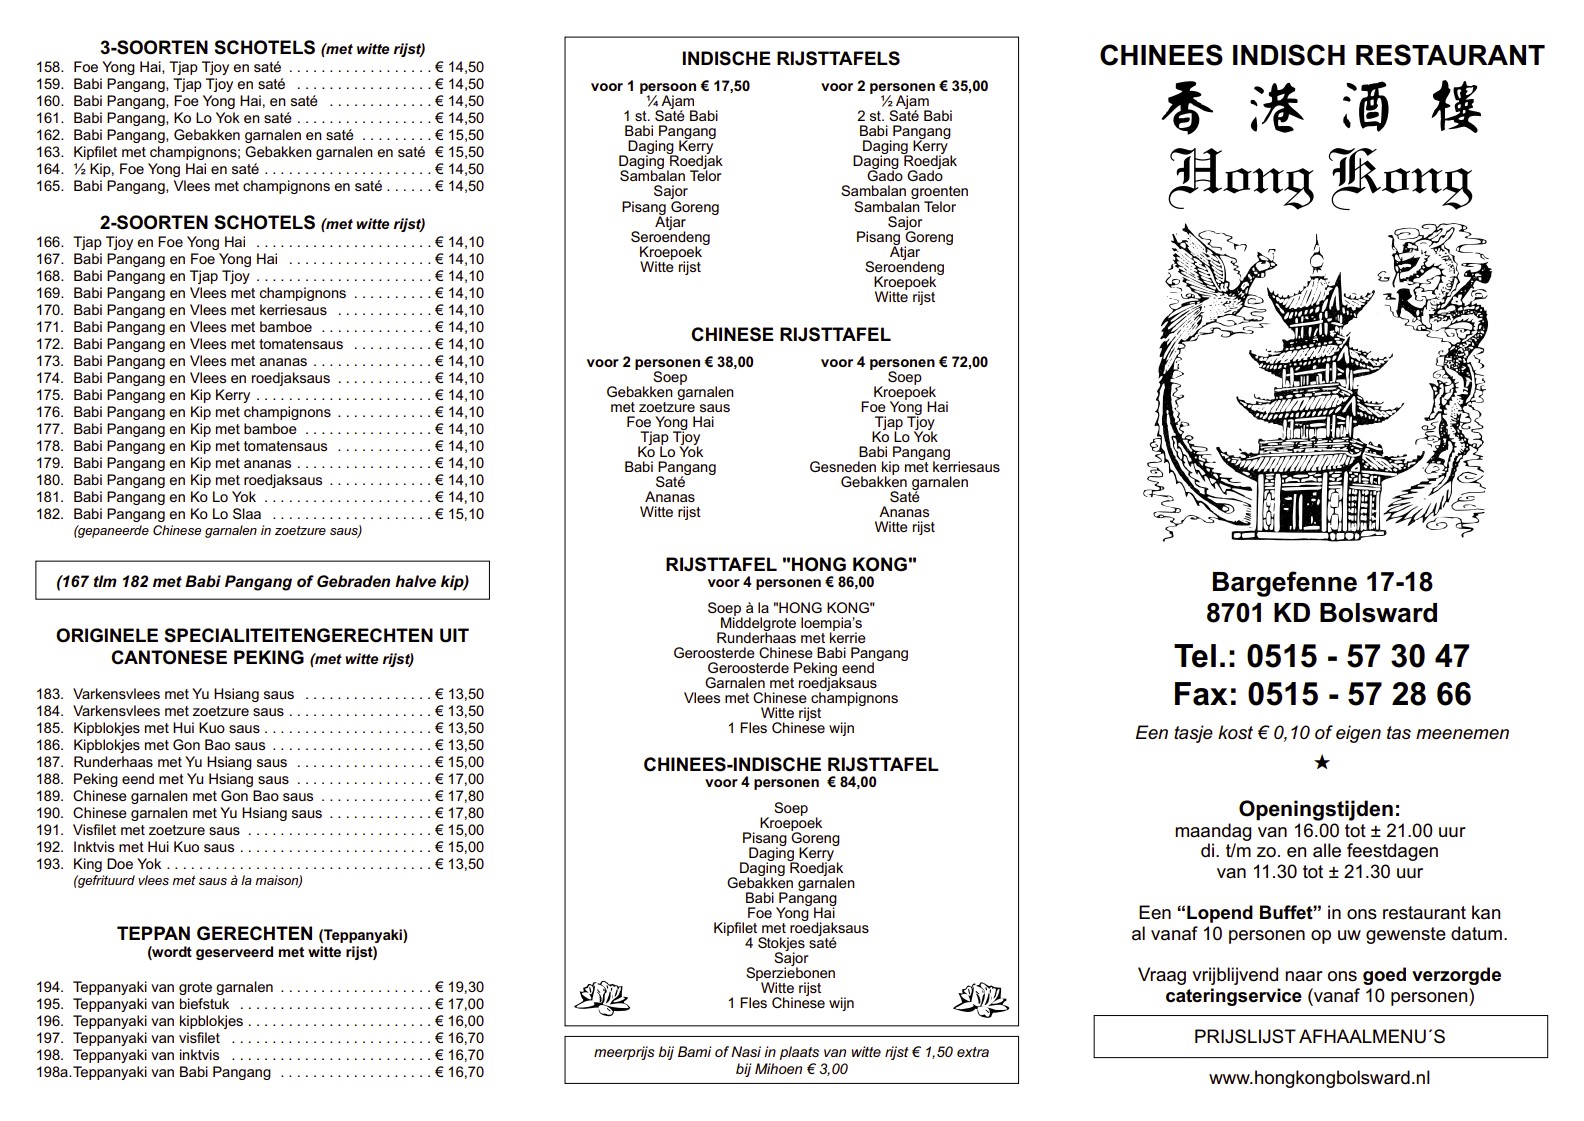 Menukaart Chinees Indisch Restaurant Hong Kong Bolsward - pagina 1